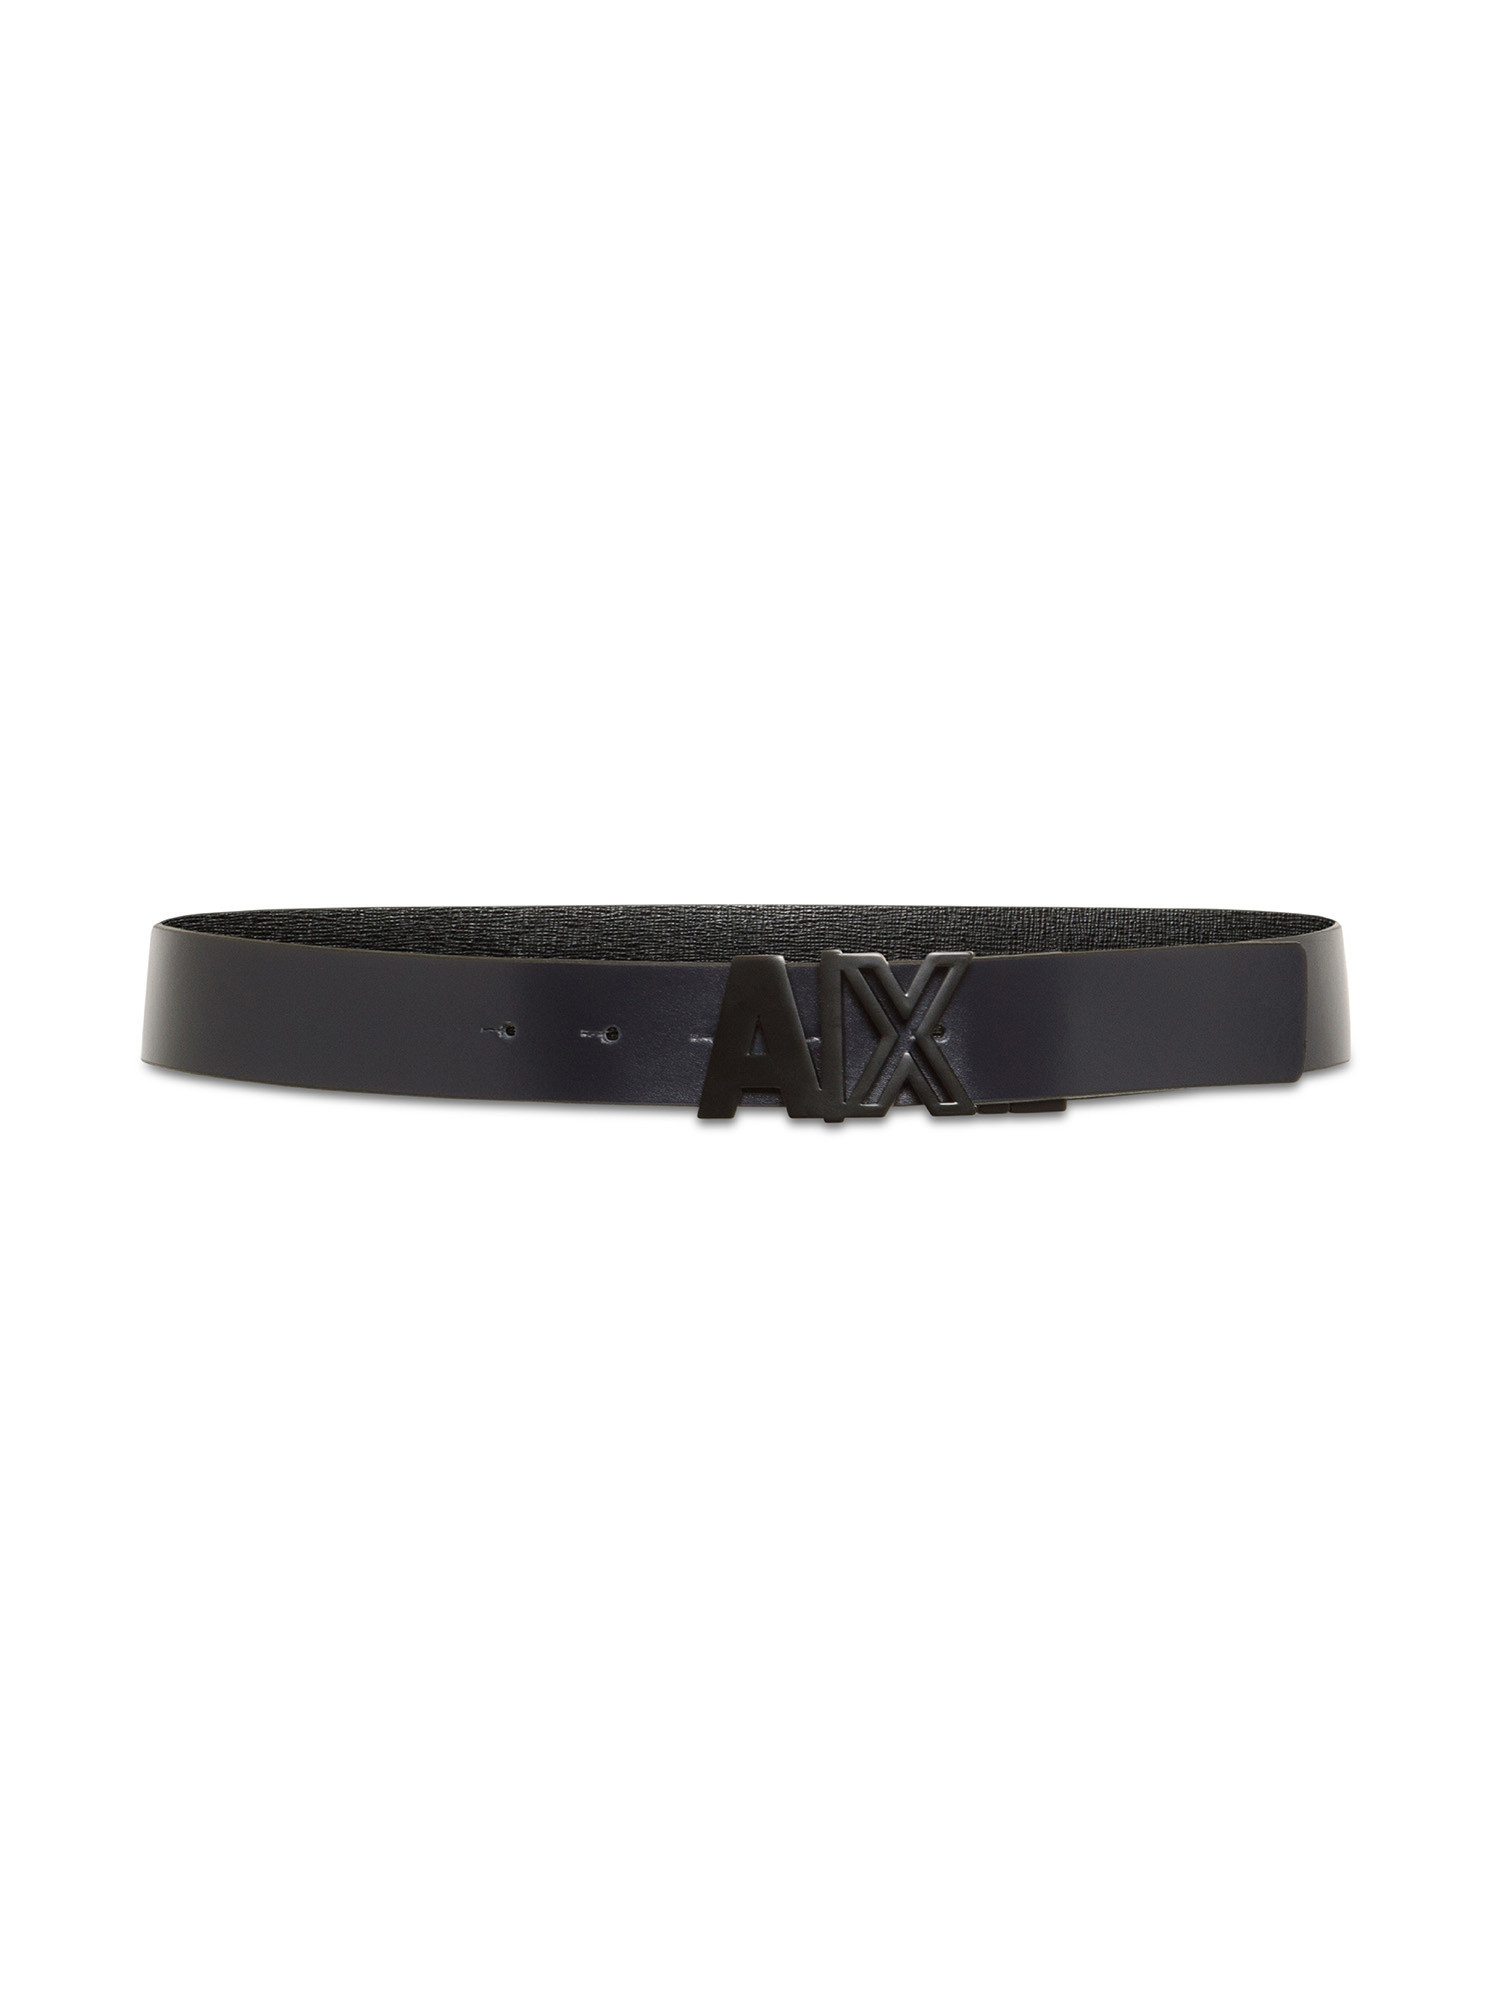 Armani Exchange - Reversible leather belt, Dark Blue, large image number 1